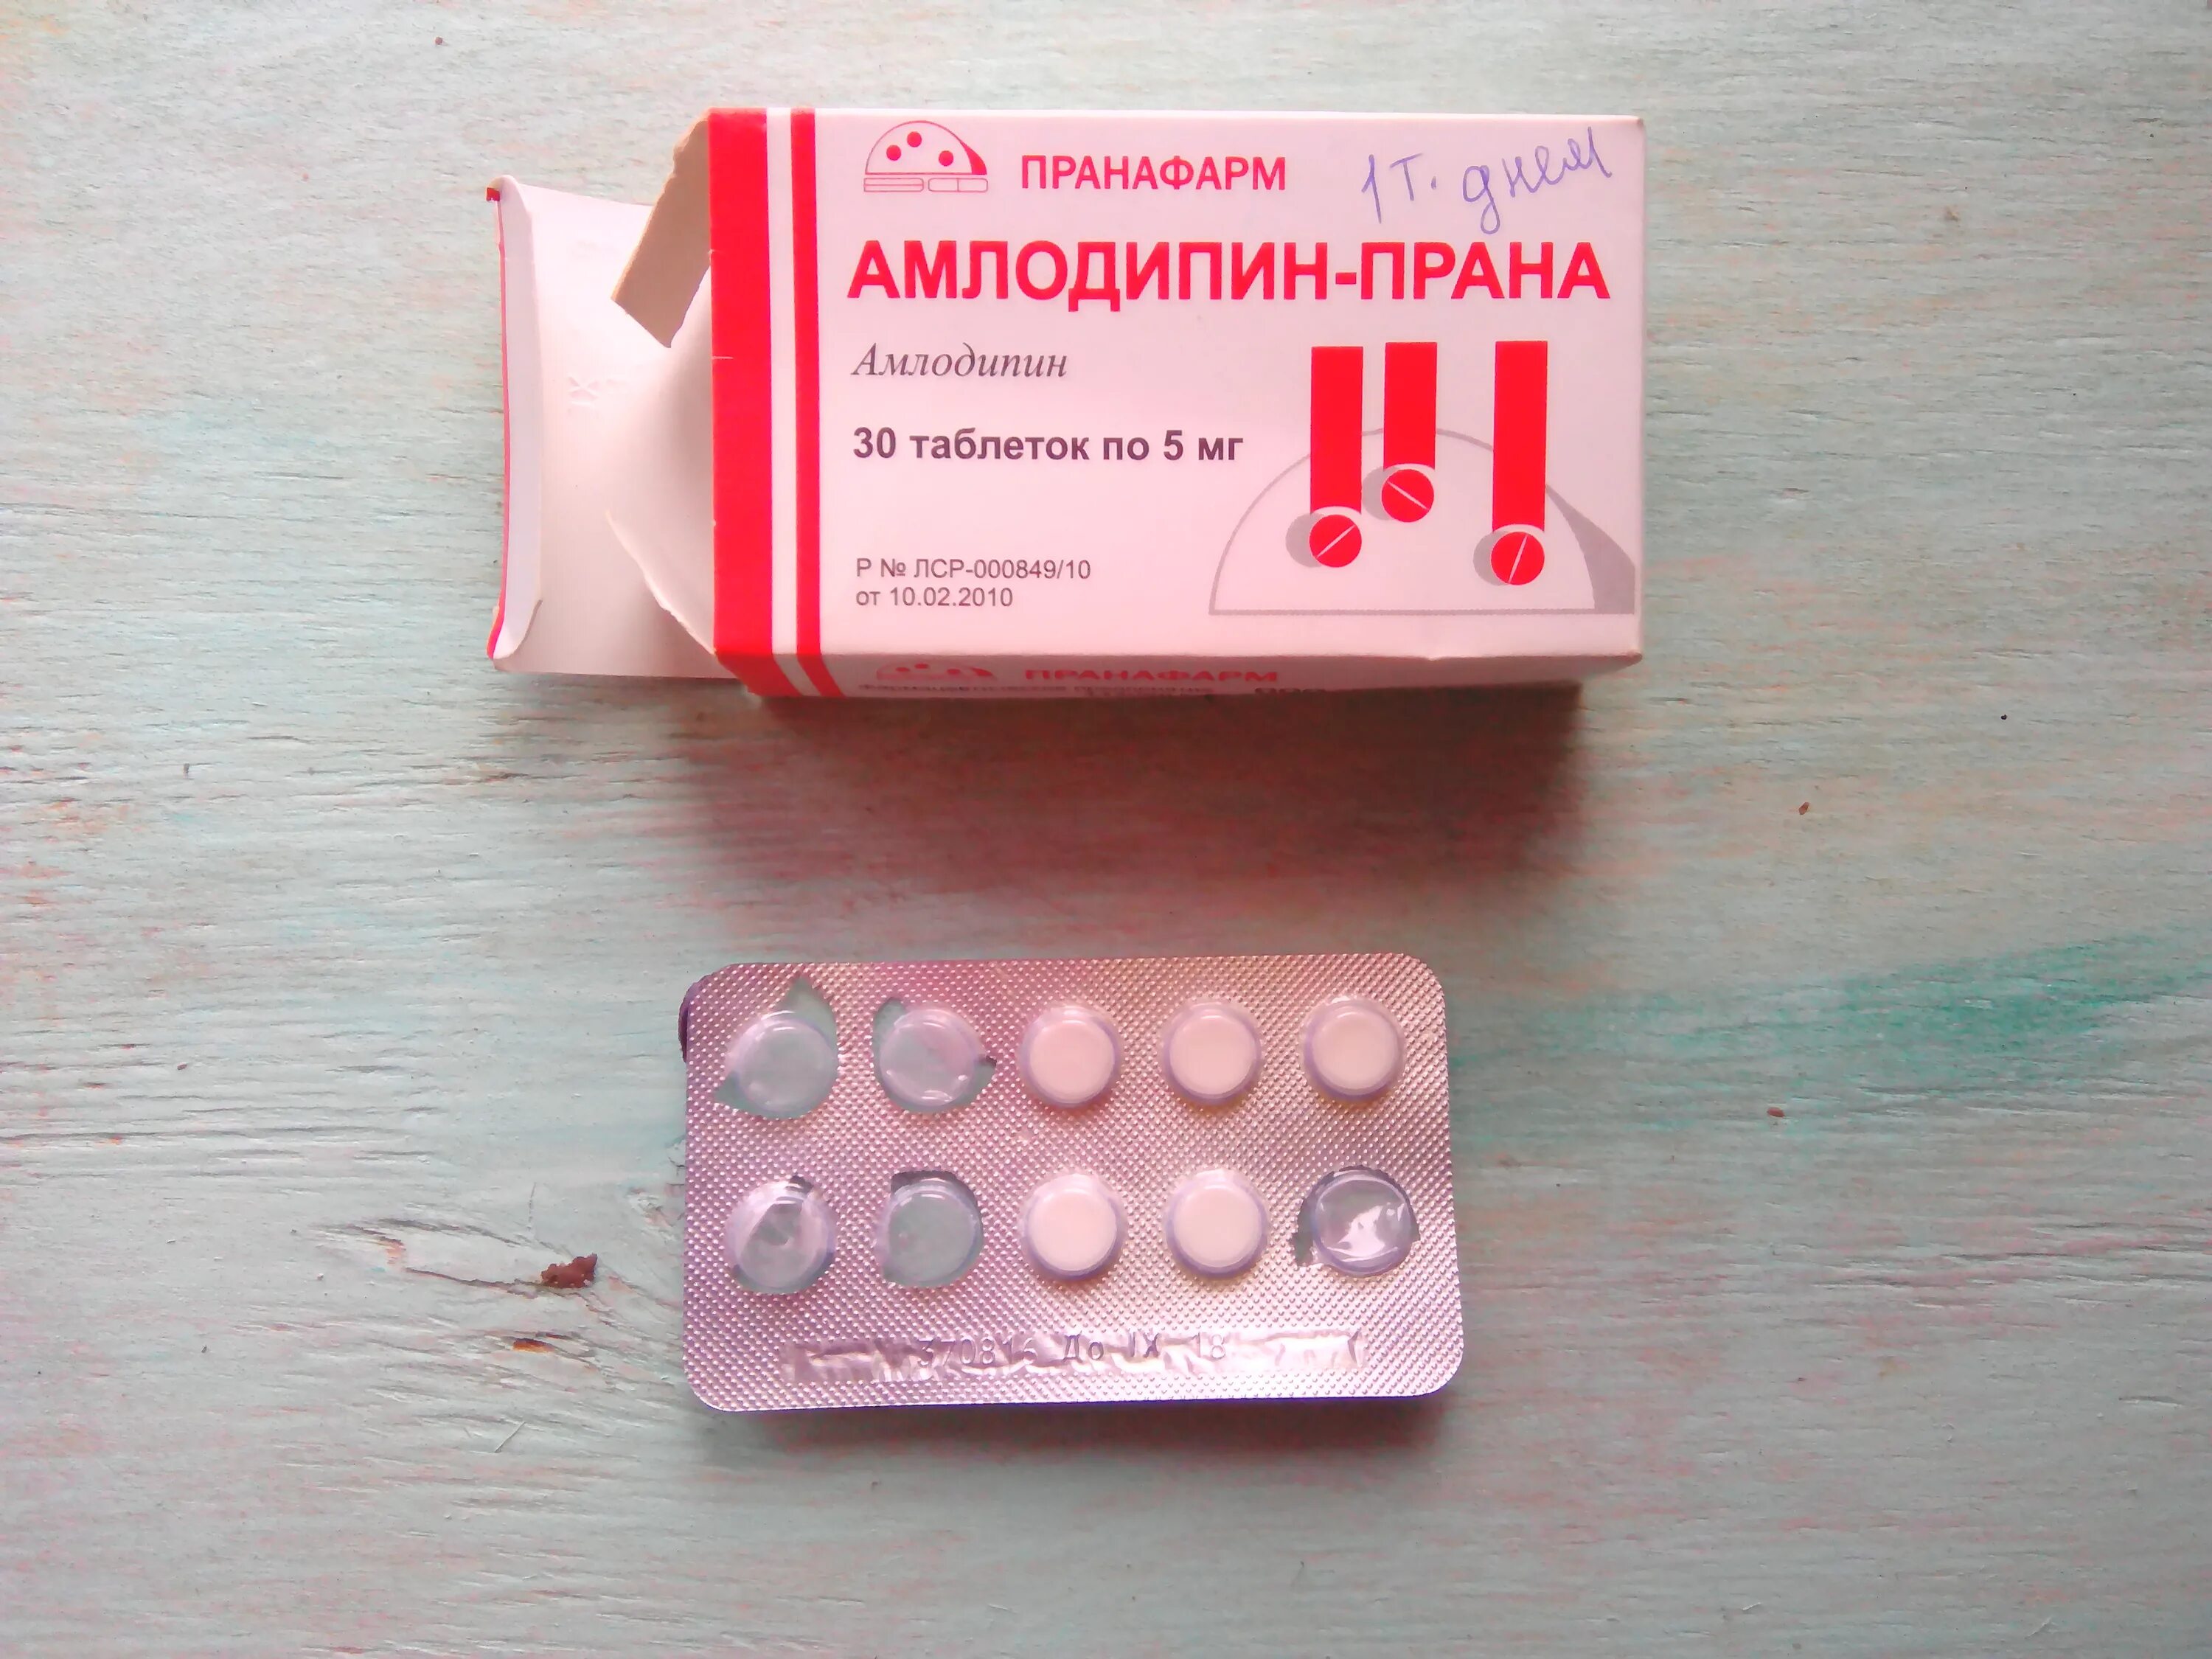 Амлодипин 5 Пранафарм. Амлодипин Прана 5 мг. Амлодипин - Прана табл 10 мг x40. Розовые таблетки от давления.